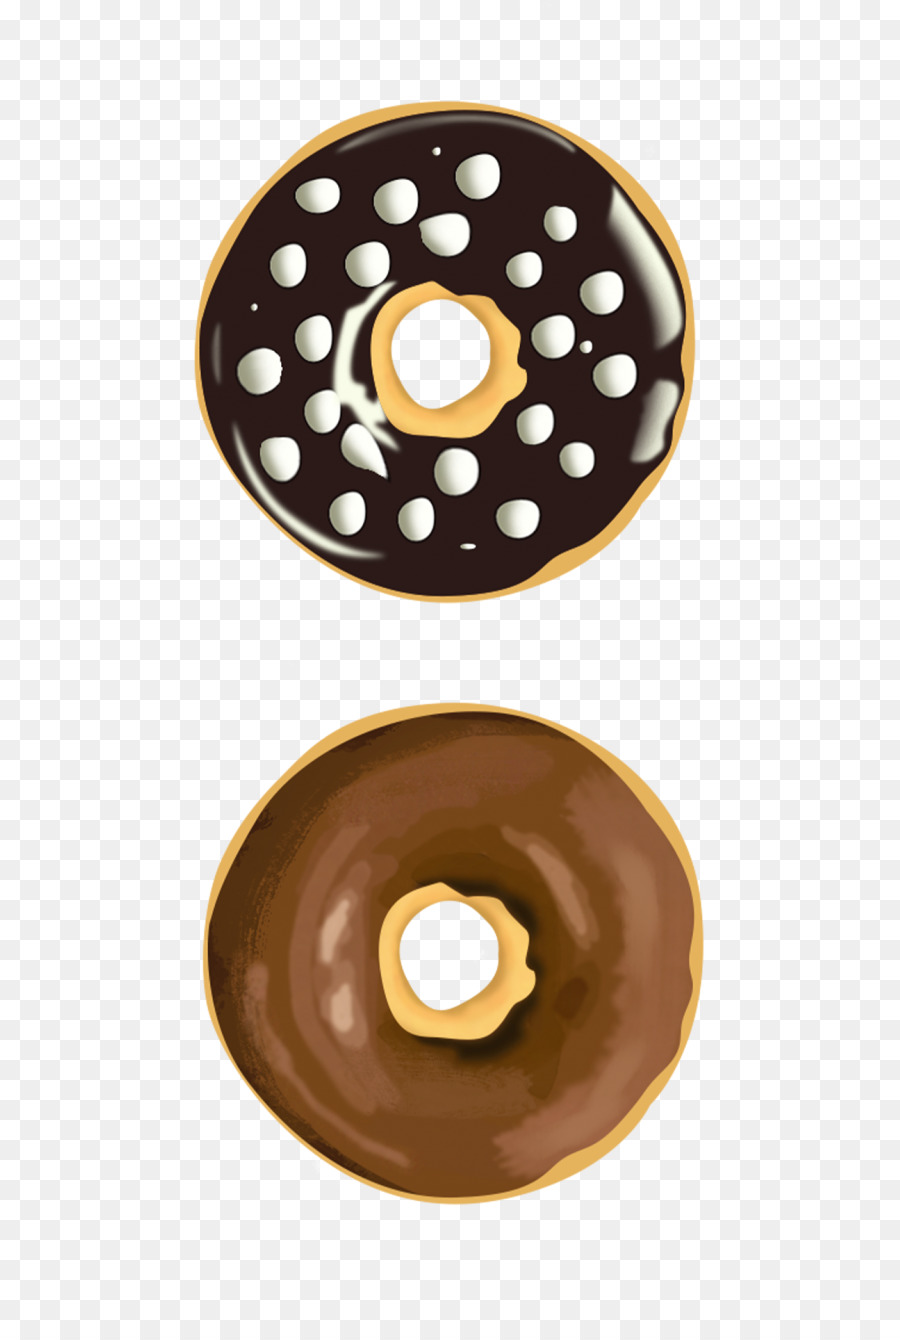 Donuts Chocolate cake Portable Network Graphics Clip art - burger emoji transparent png freepngimage png download - 715*1340 - Free Transparent Donuts png Download.